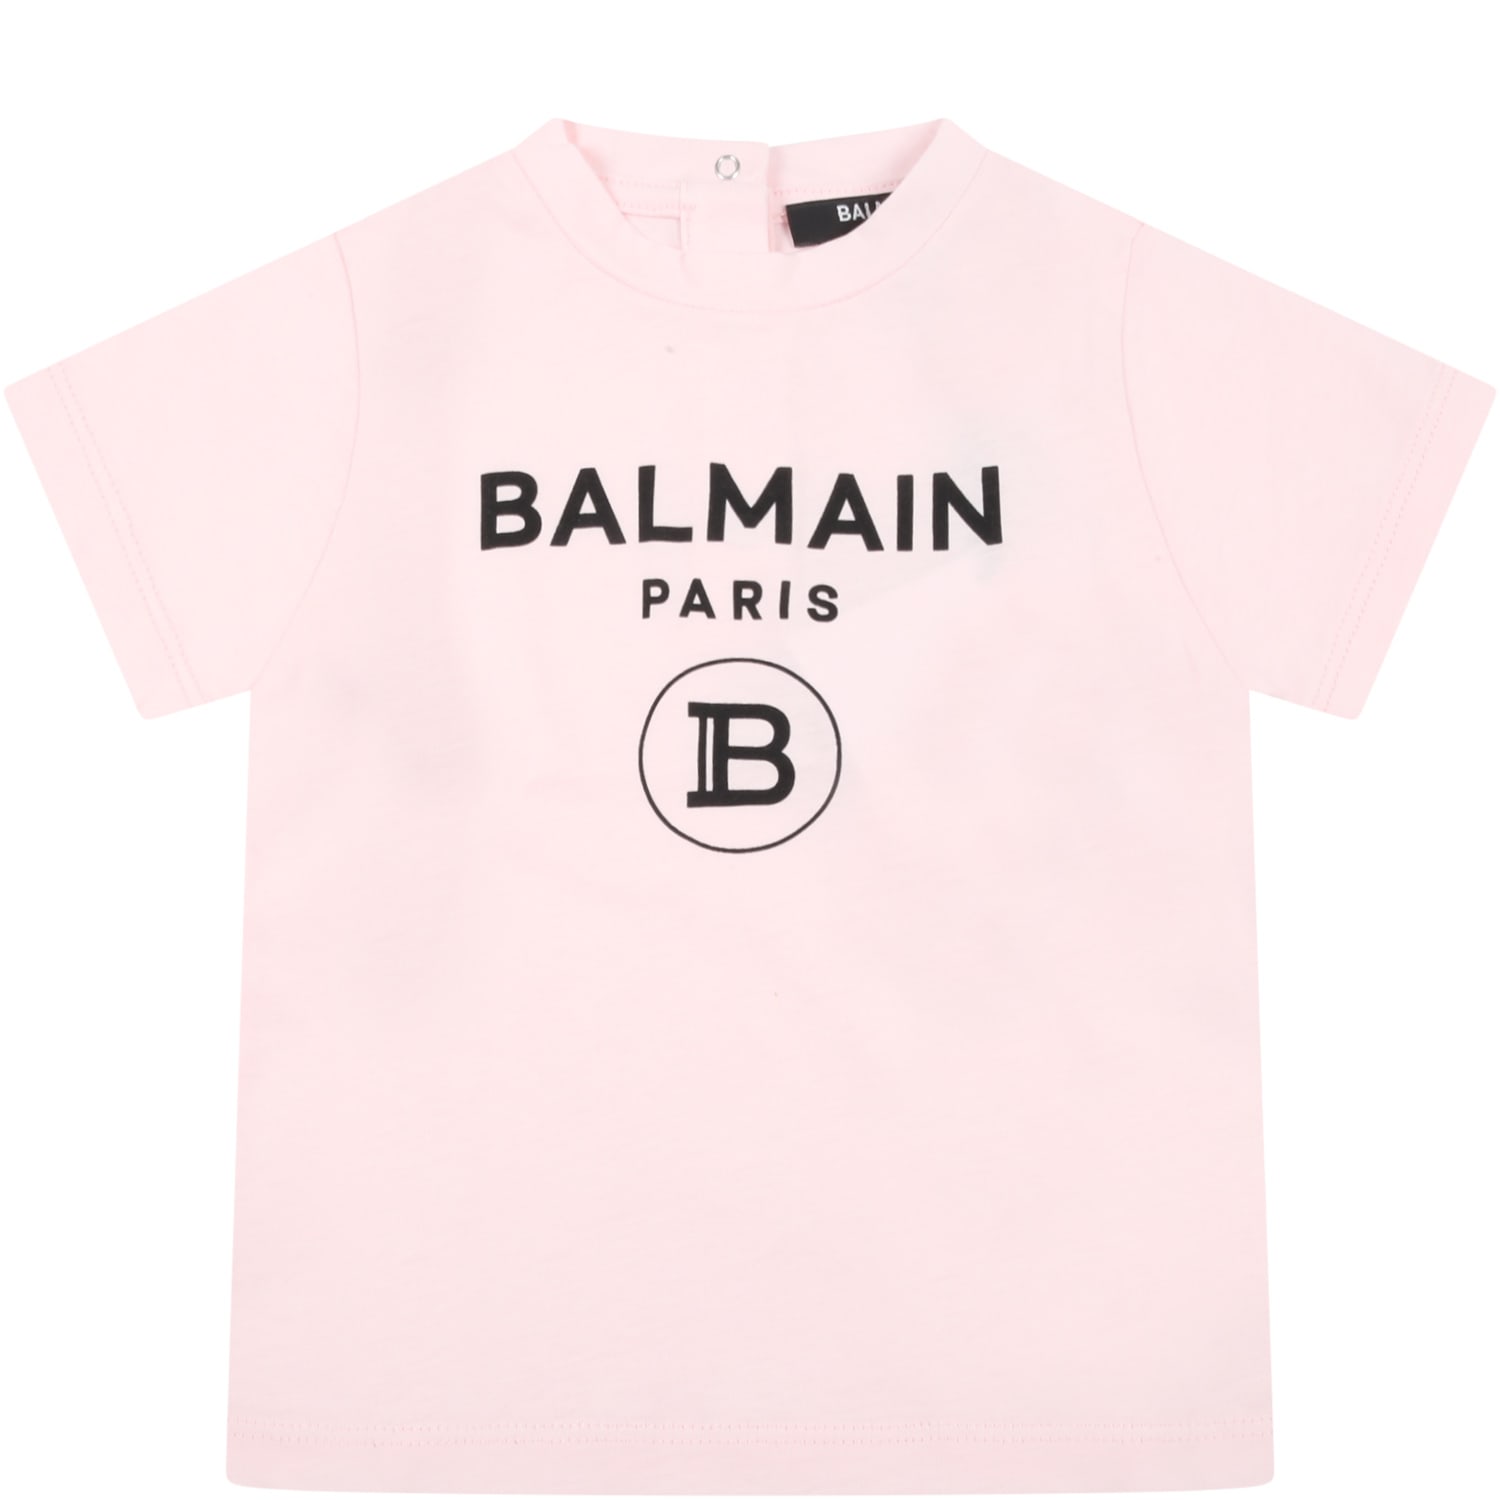 Balmain Pink T-shirt For Baby Girl With Logos